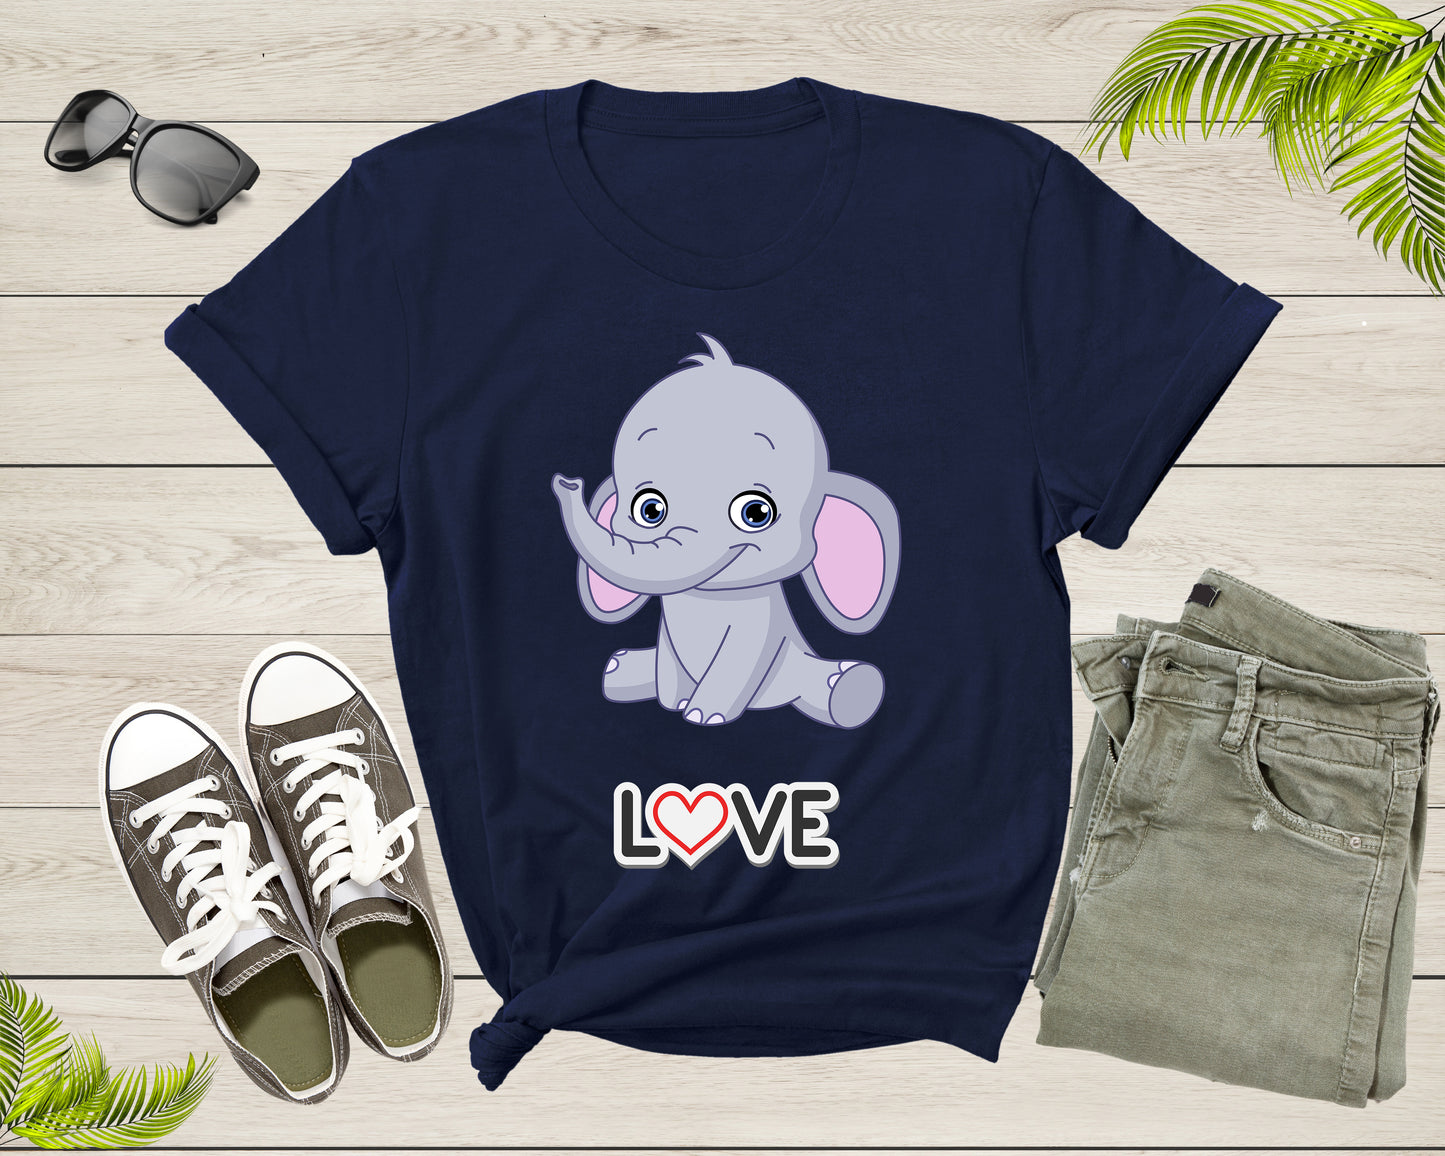 I Love Elephant Cute Elephant Love Cute Animal for Women Men T-Shirt Animal Lover Gift T Shirt for Teenagers Kids Boys Girls Teens Tshirt